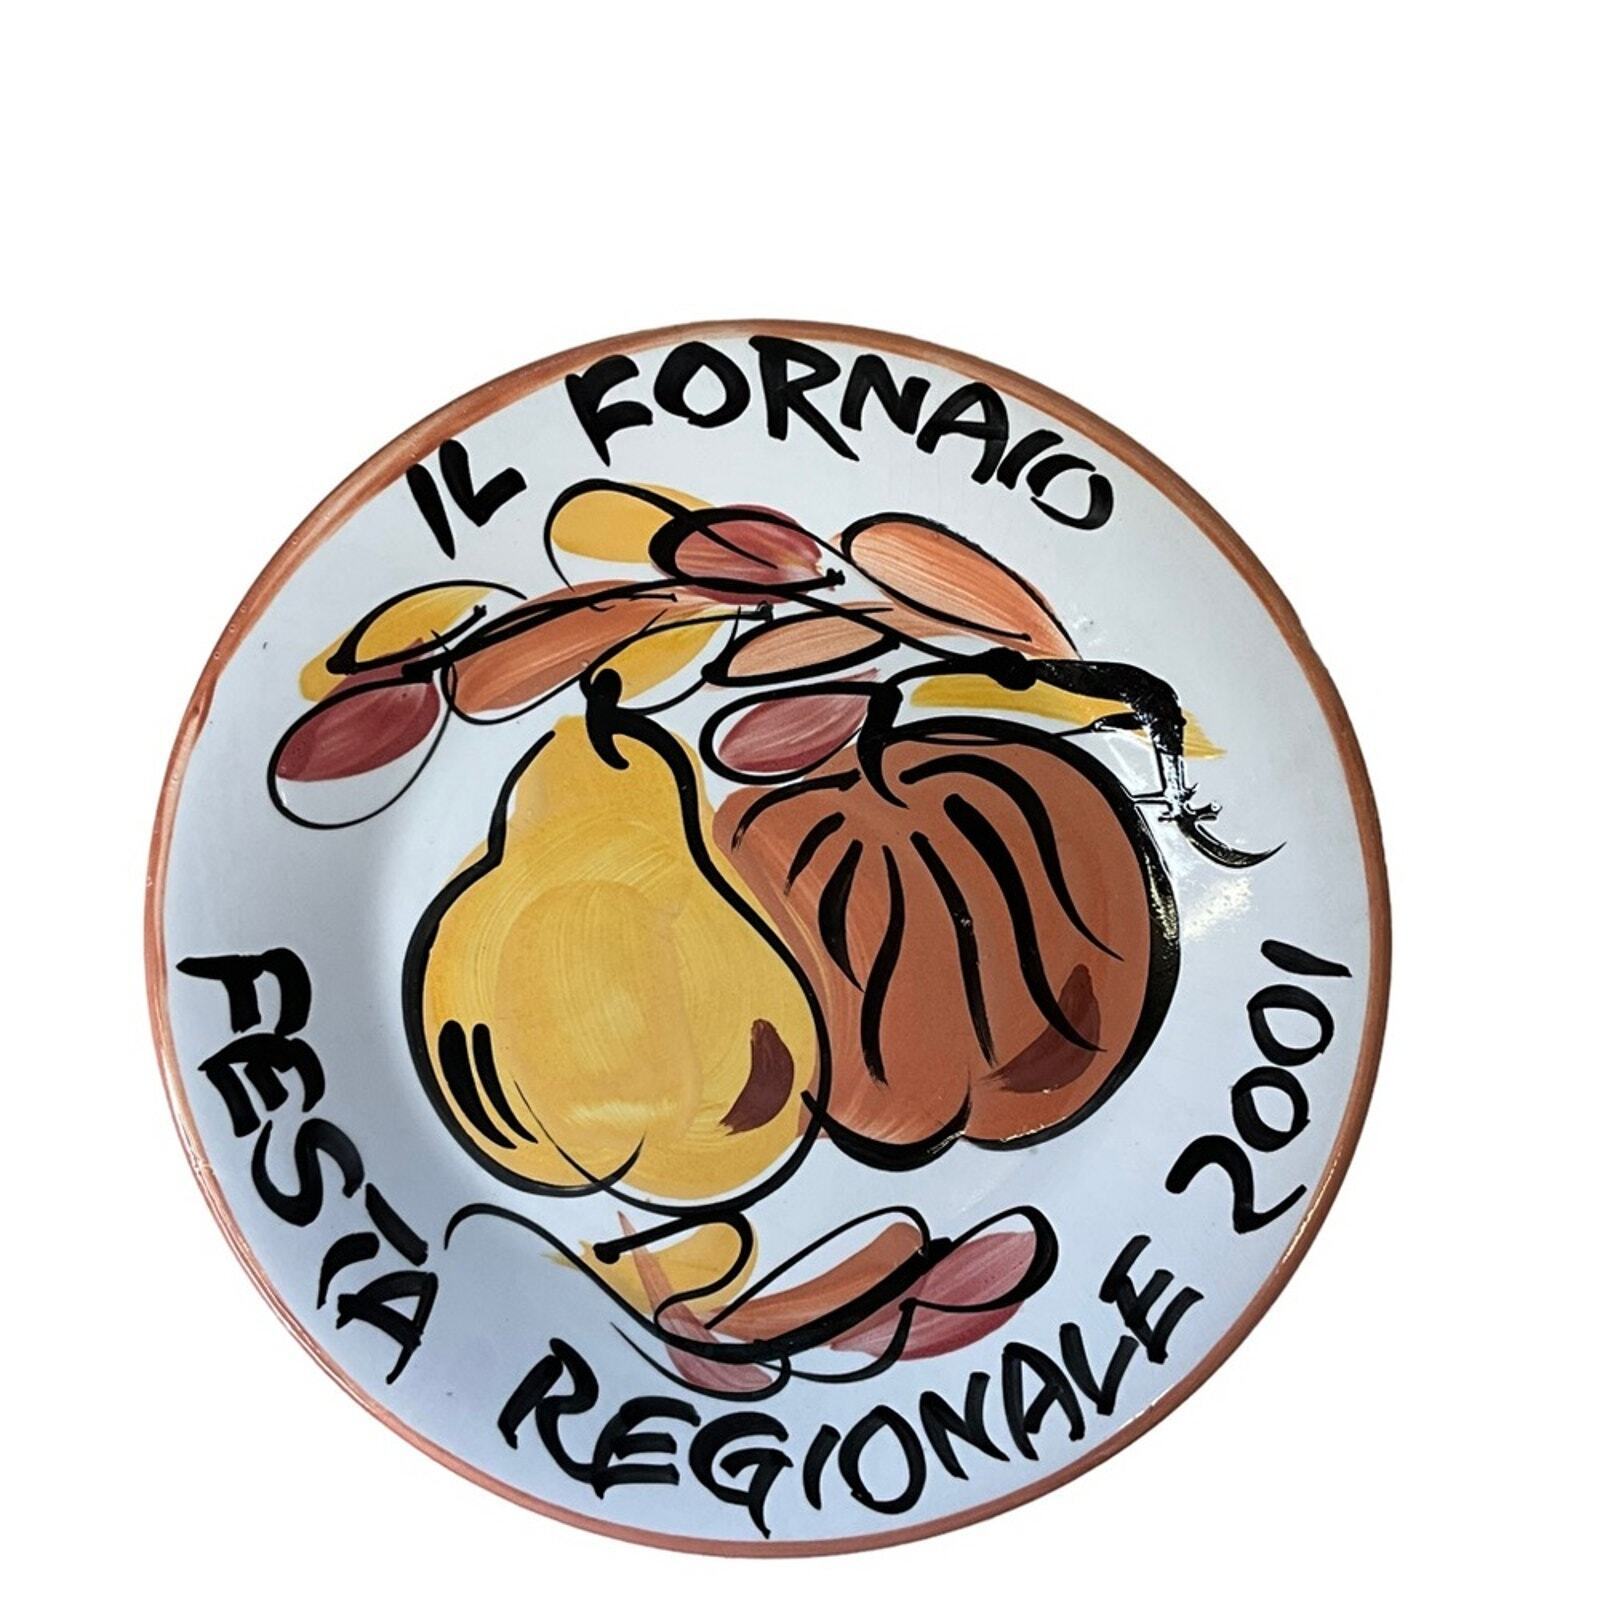 IL Fornaio Plate Festa Regionale 2001 Handpainted Dinnerware